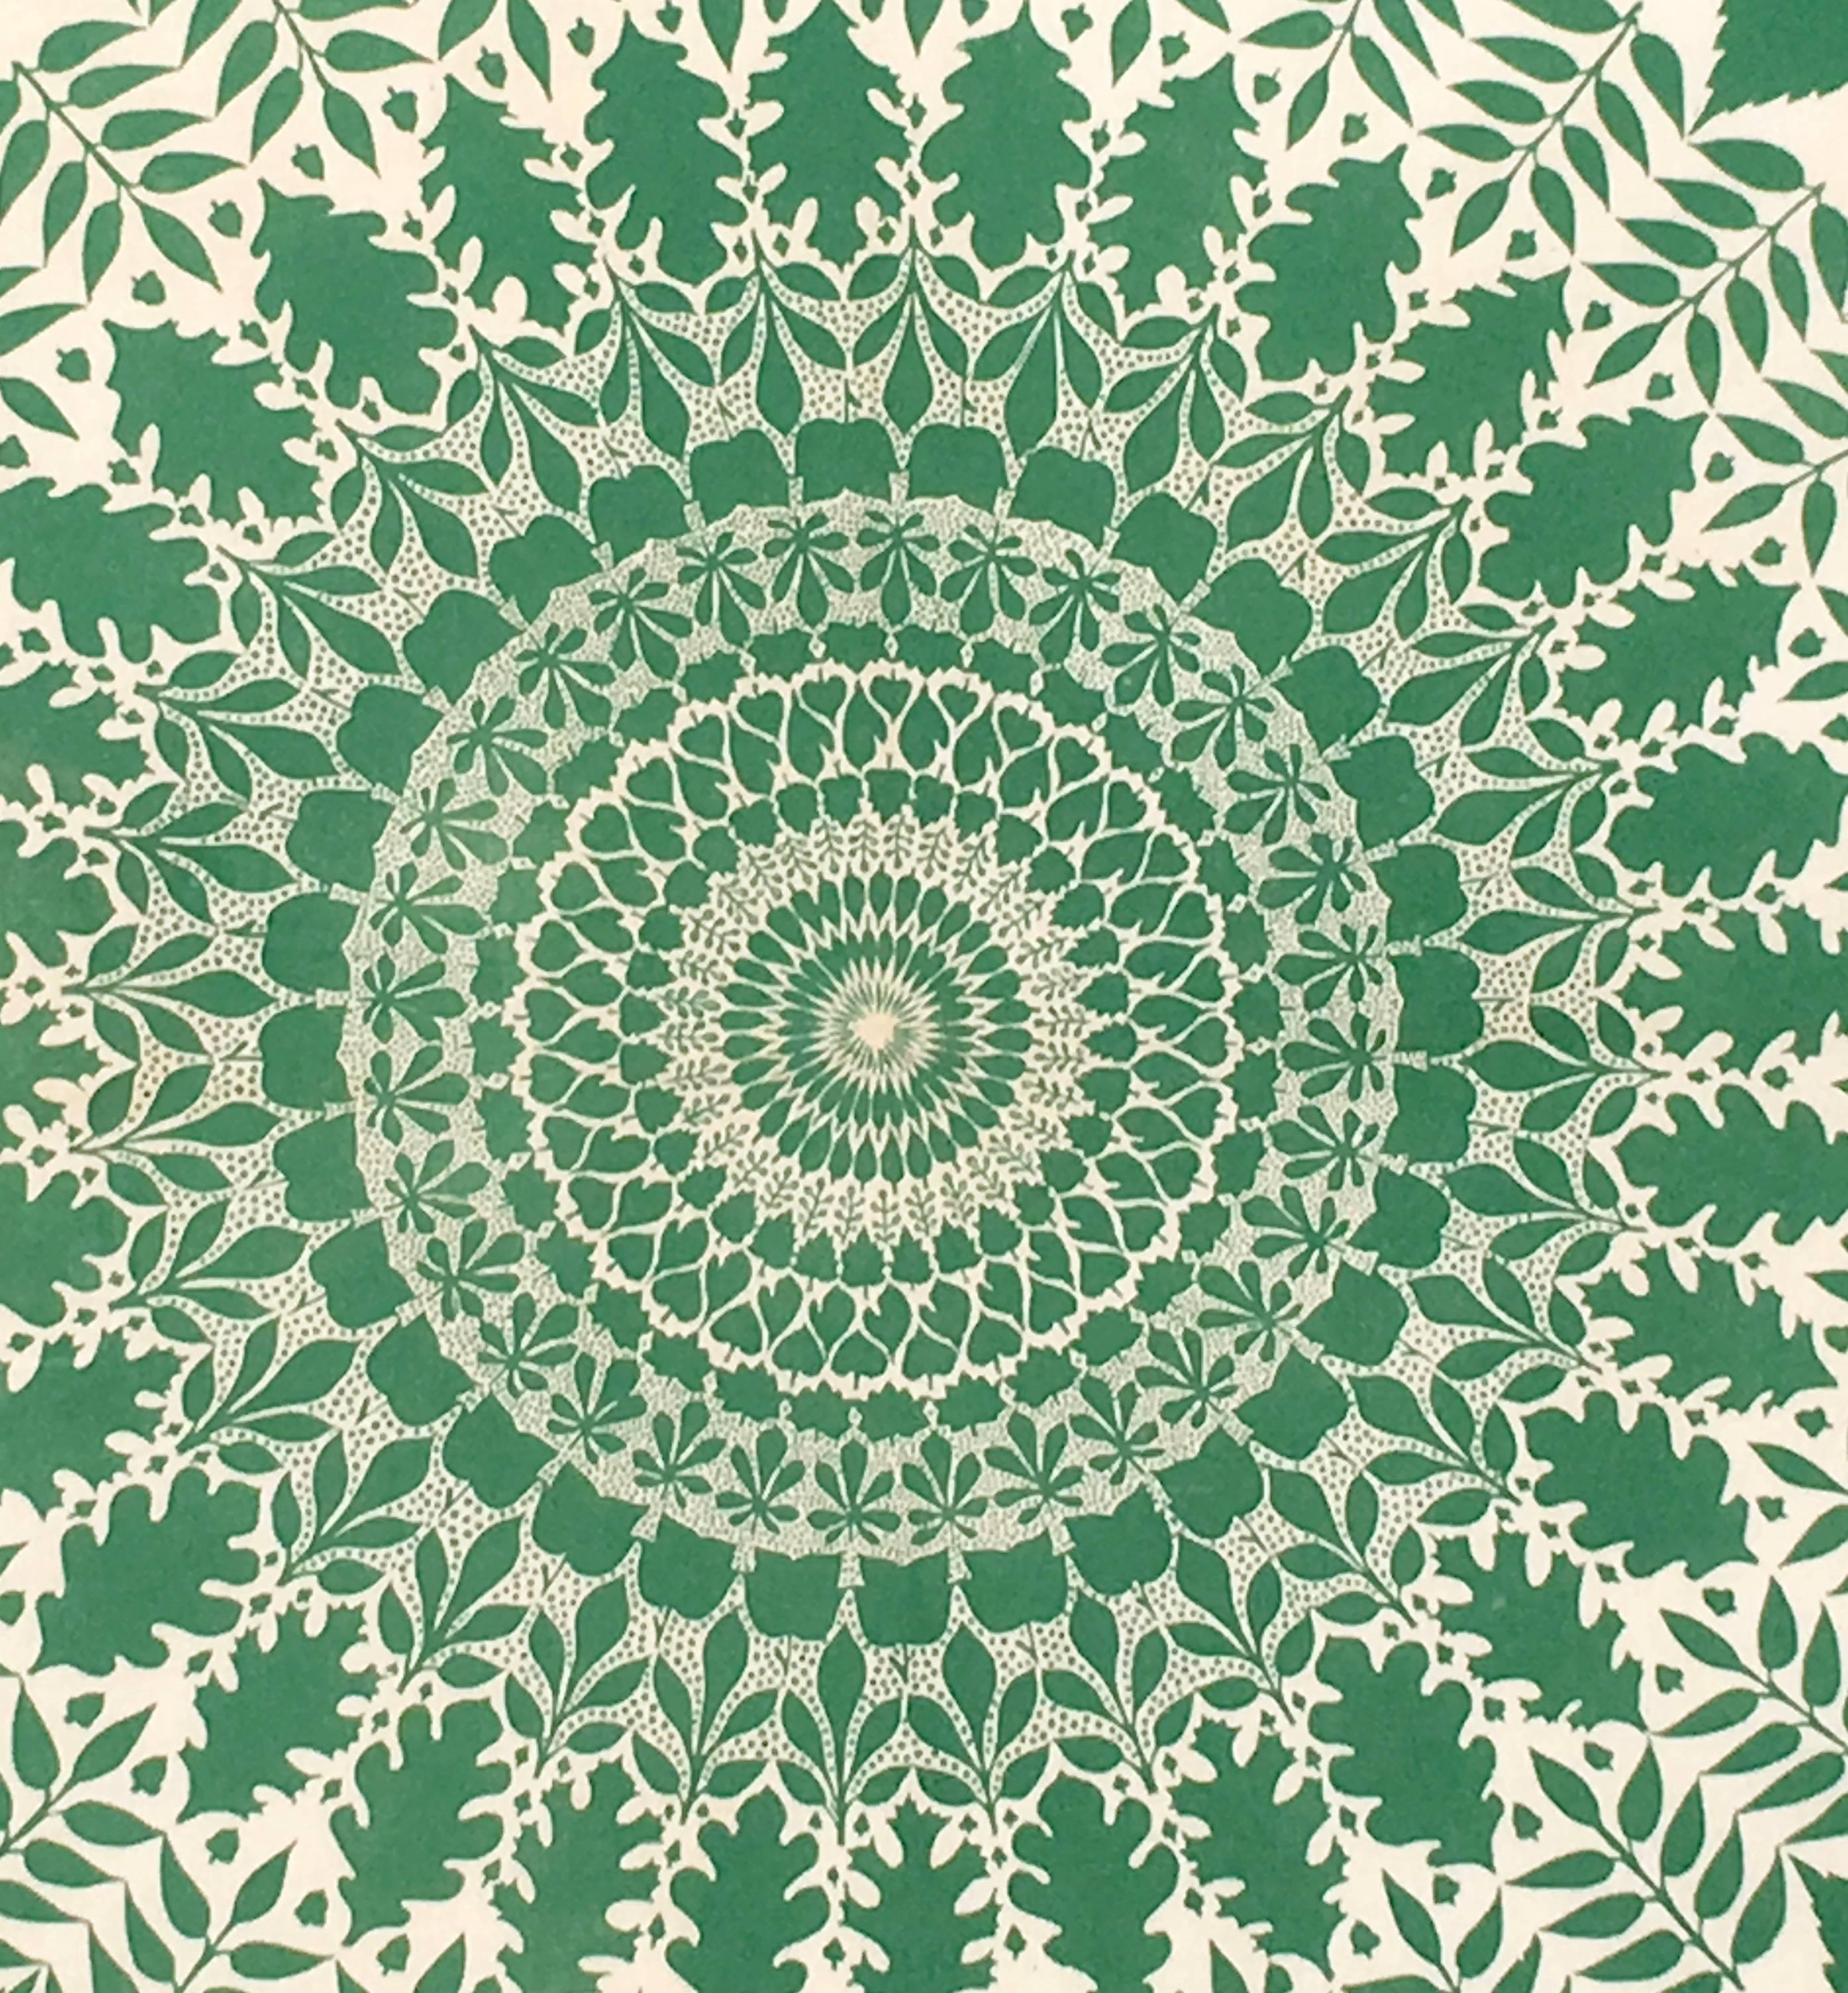 American Striking Graphic Green Folly Cove Designers Leaf Pattern Block Print